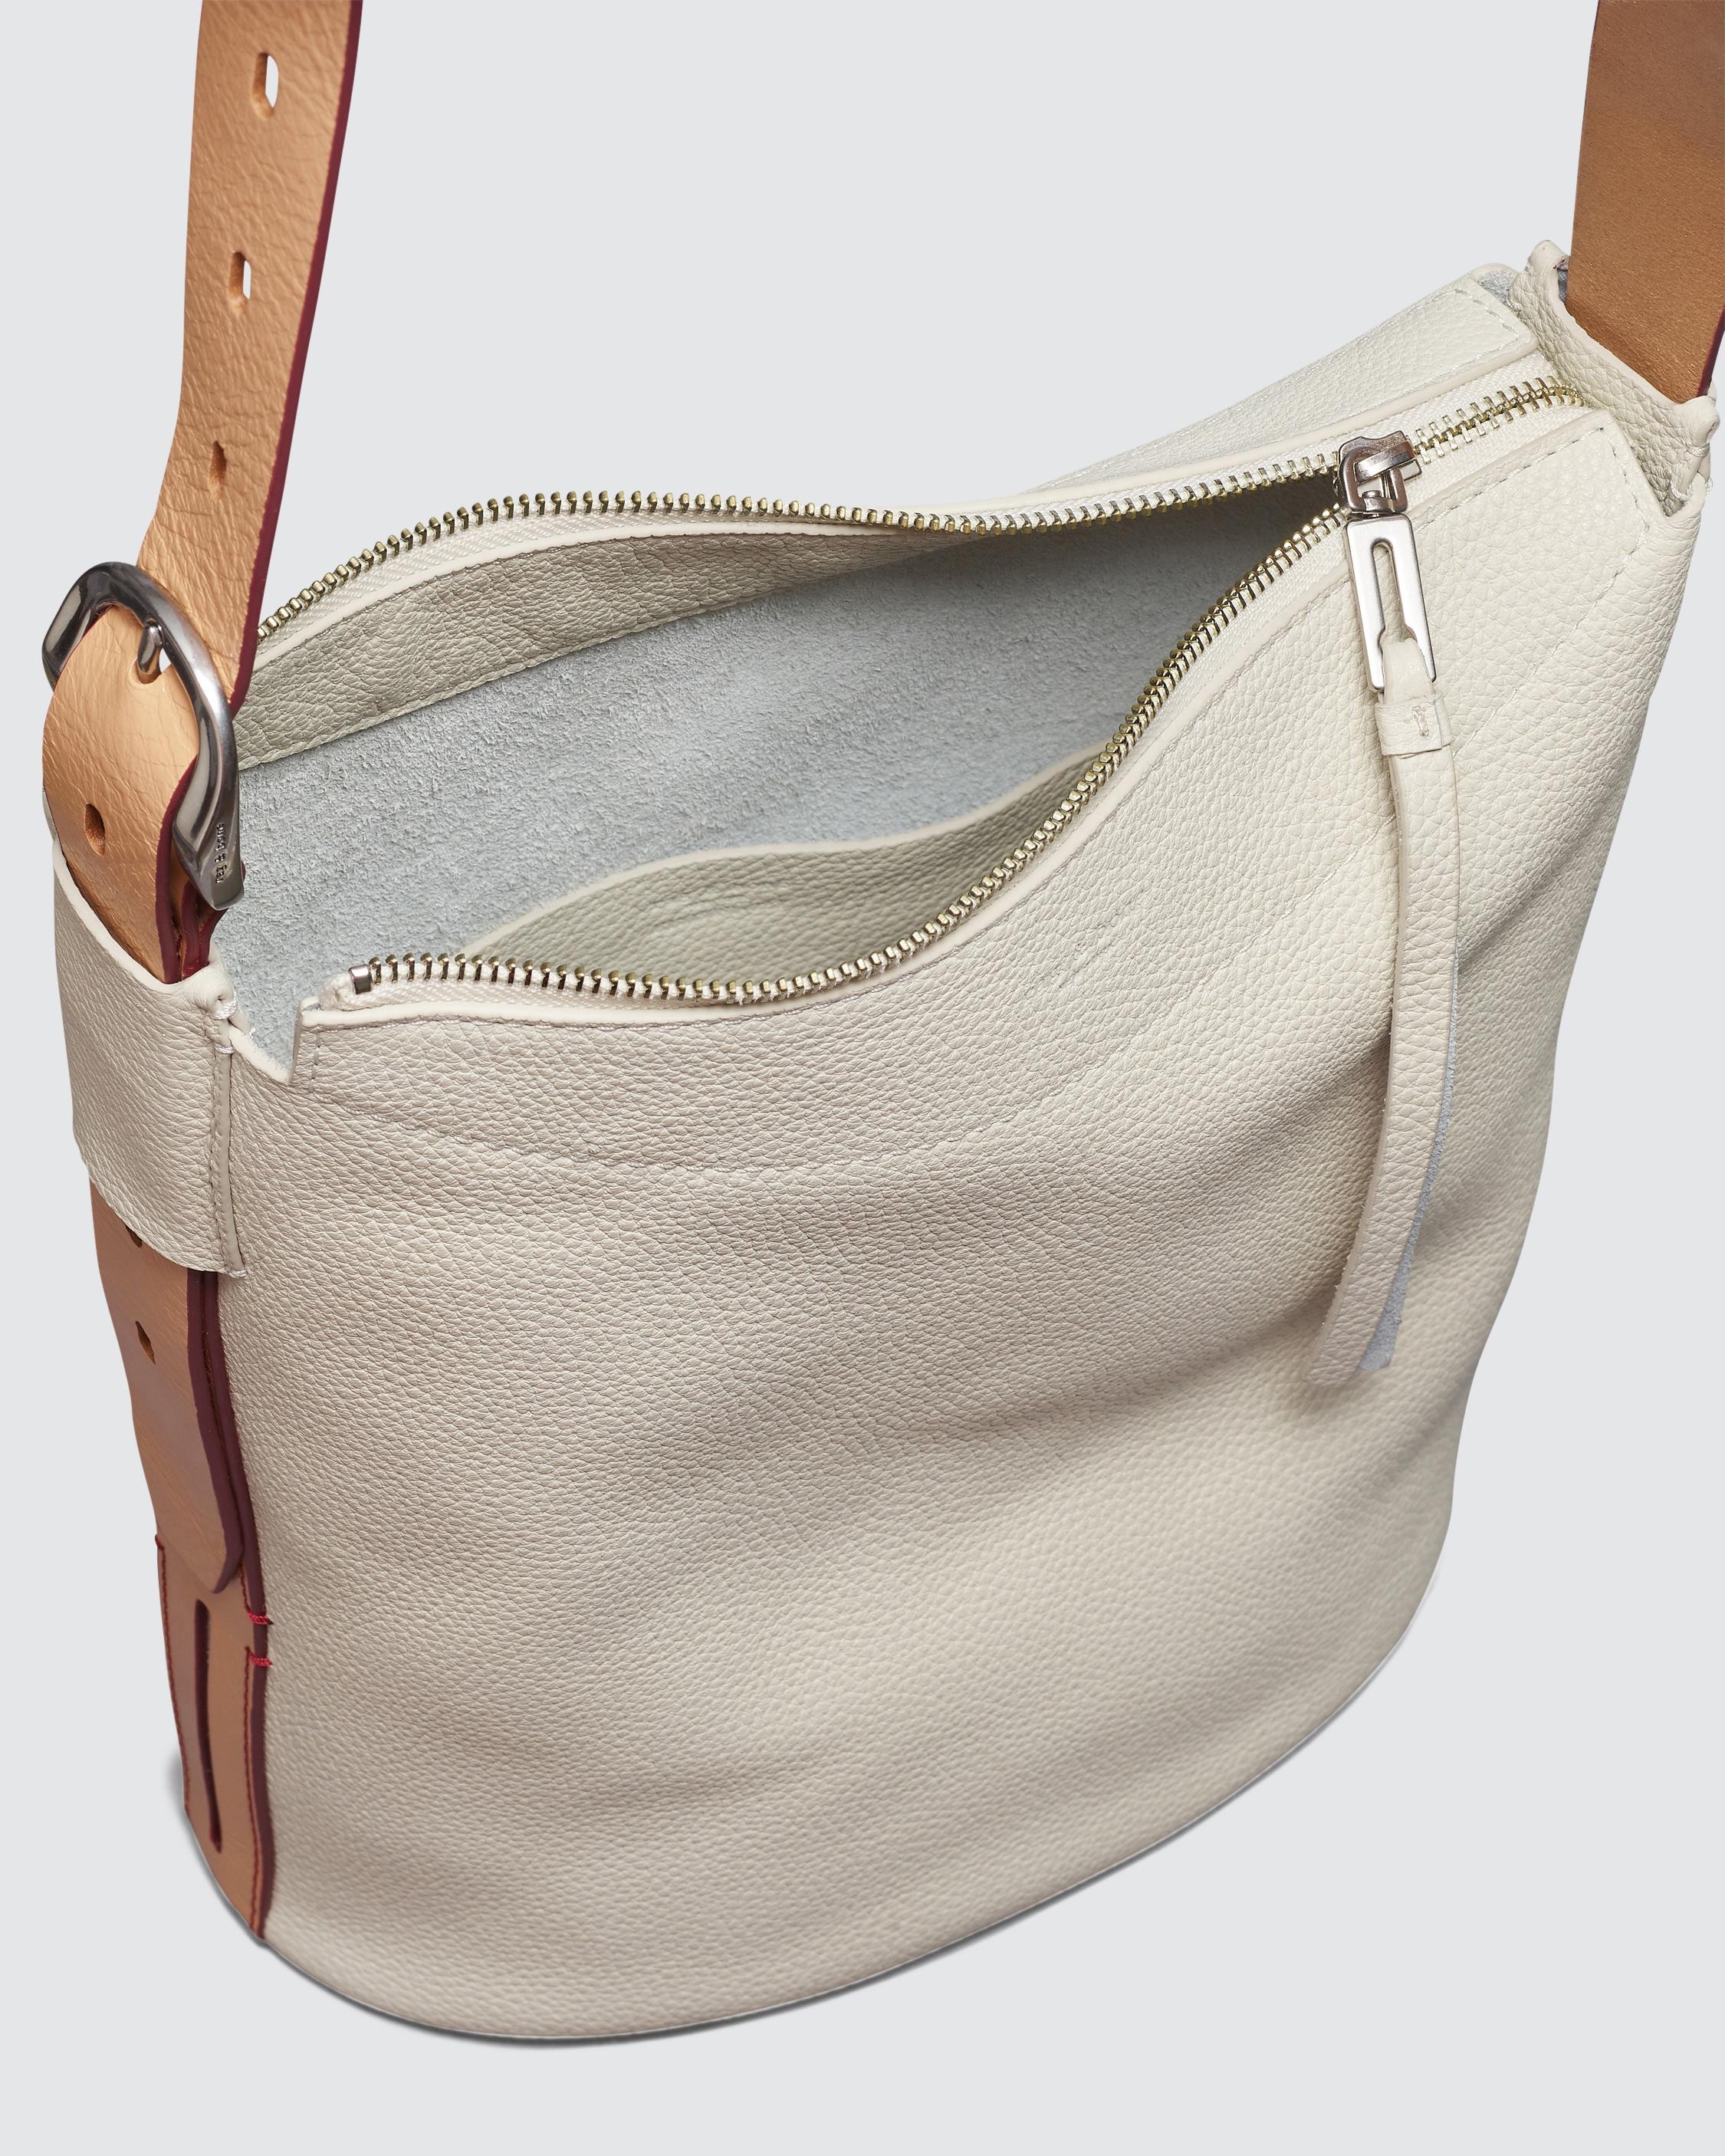 Belize Bucket Bag - Leather
Crossbody Bag - 4